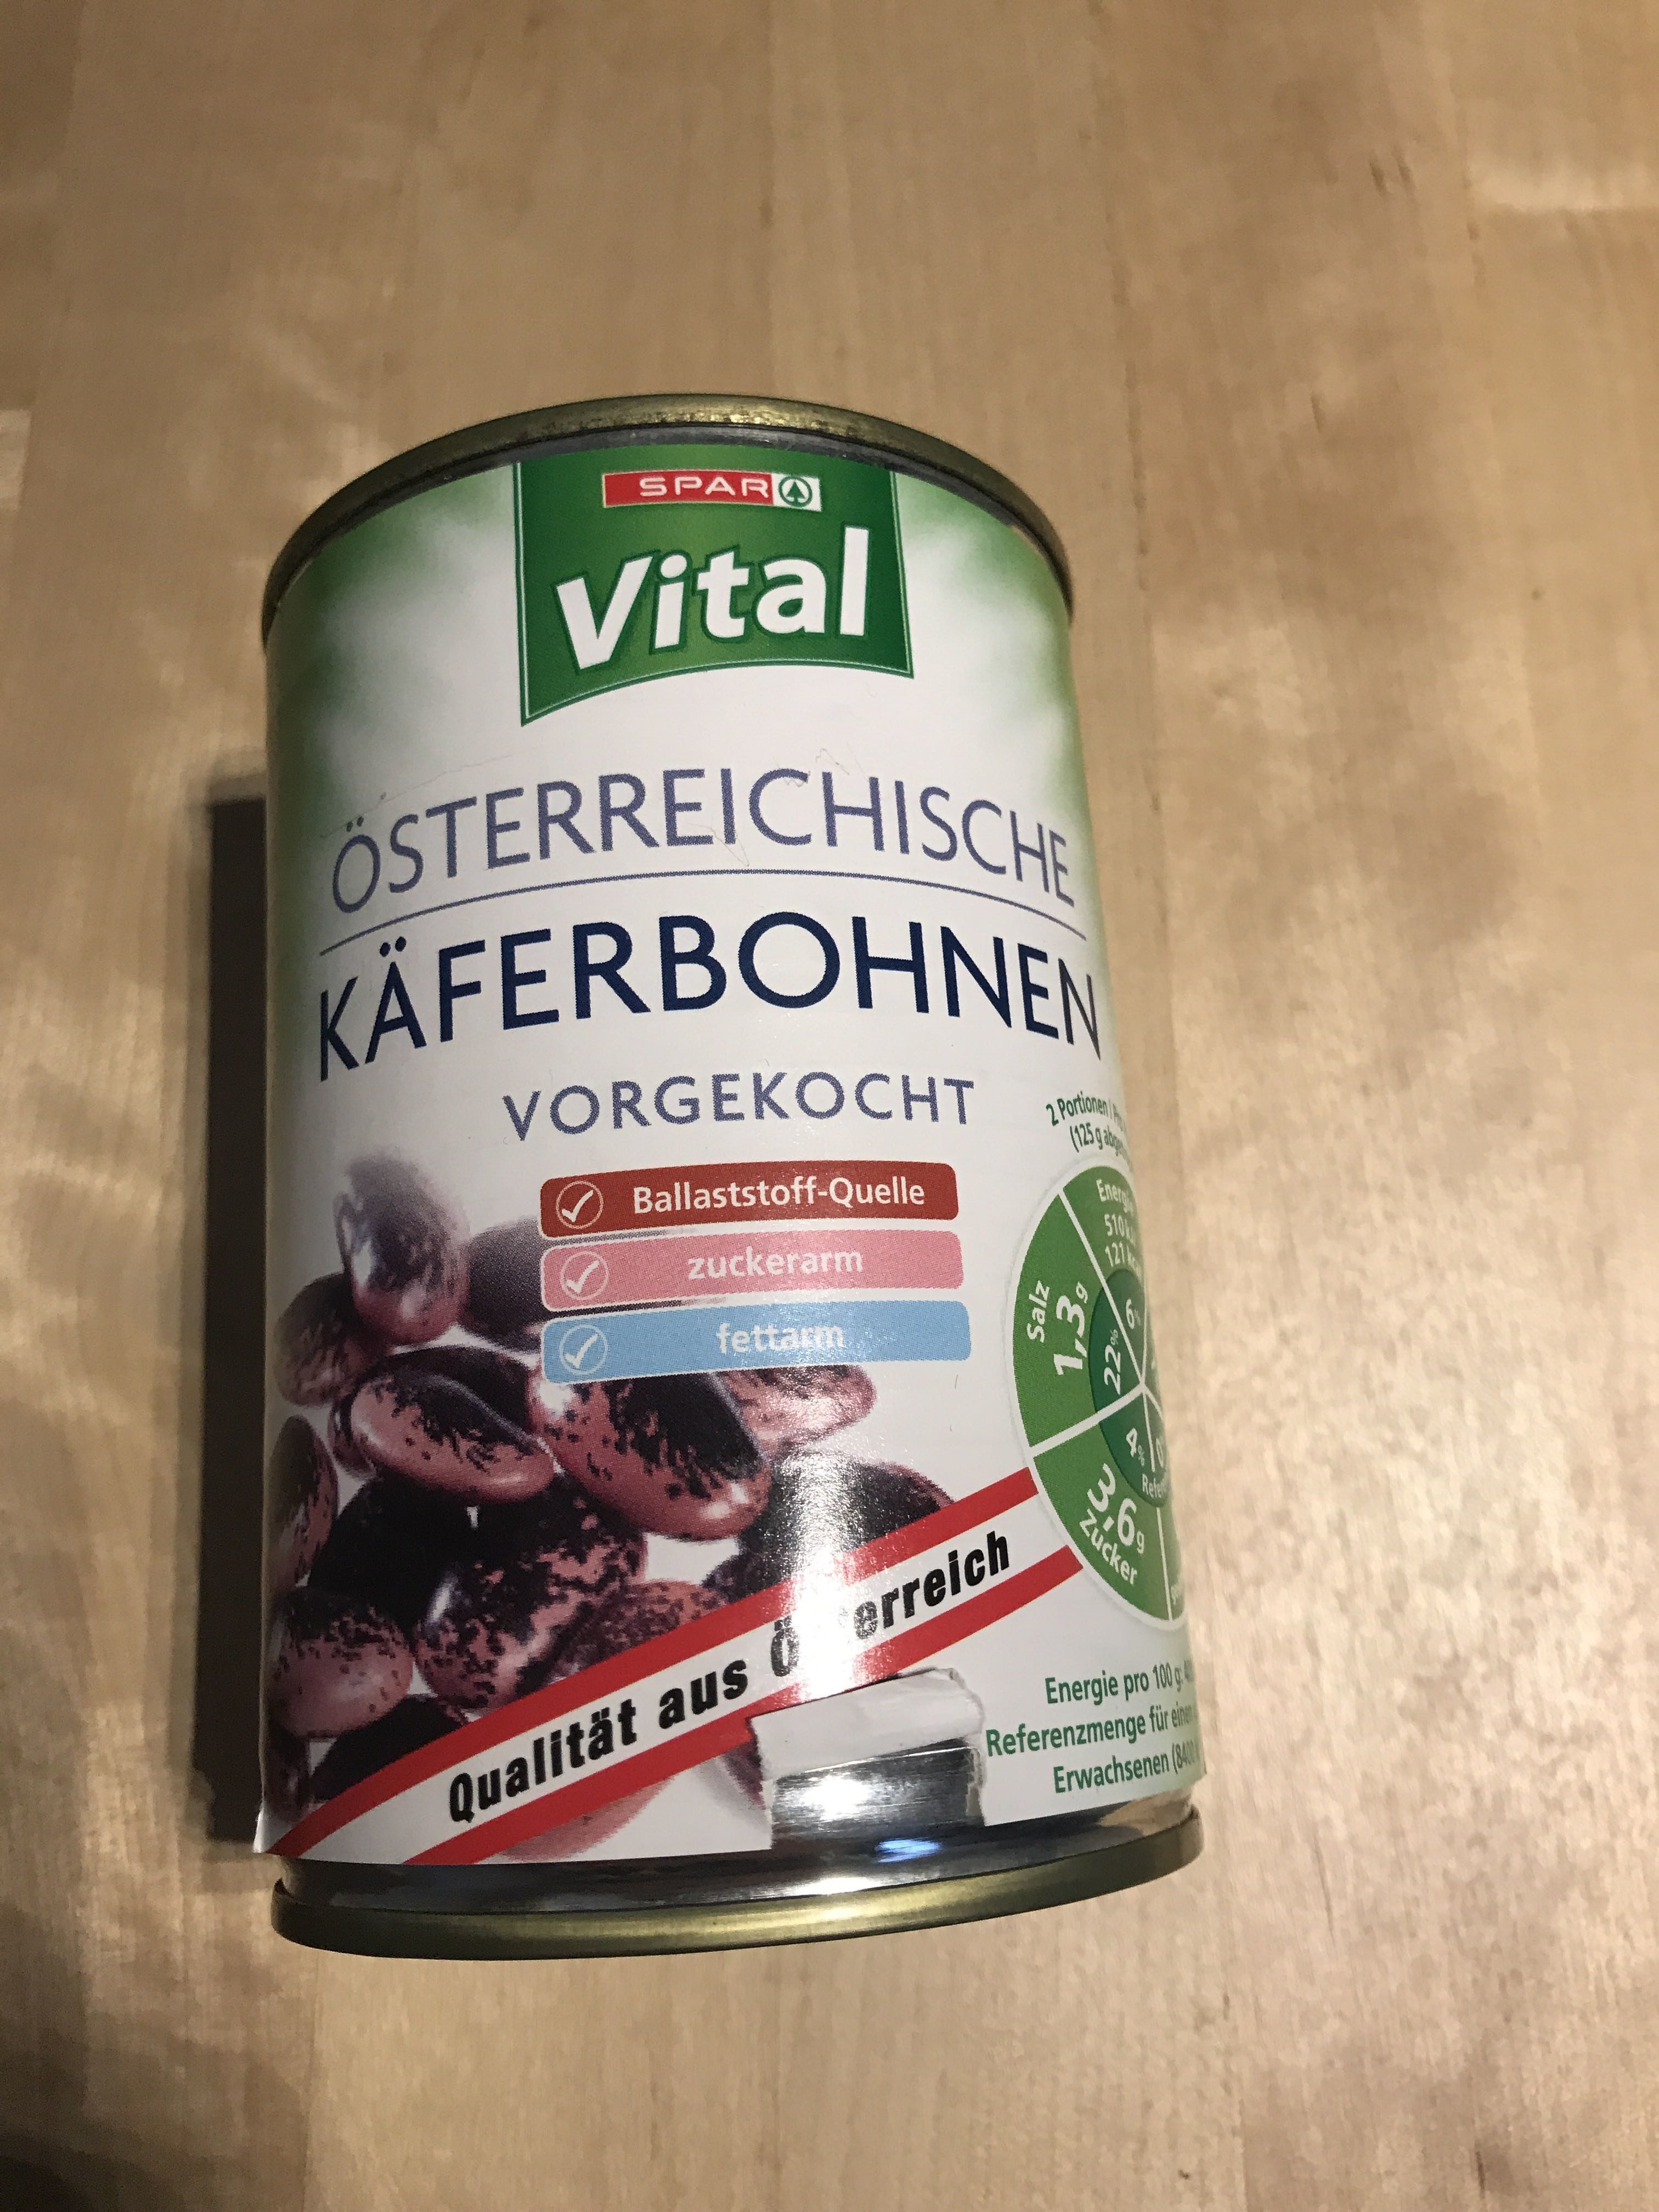 Käferbohnen - Produit - en